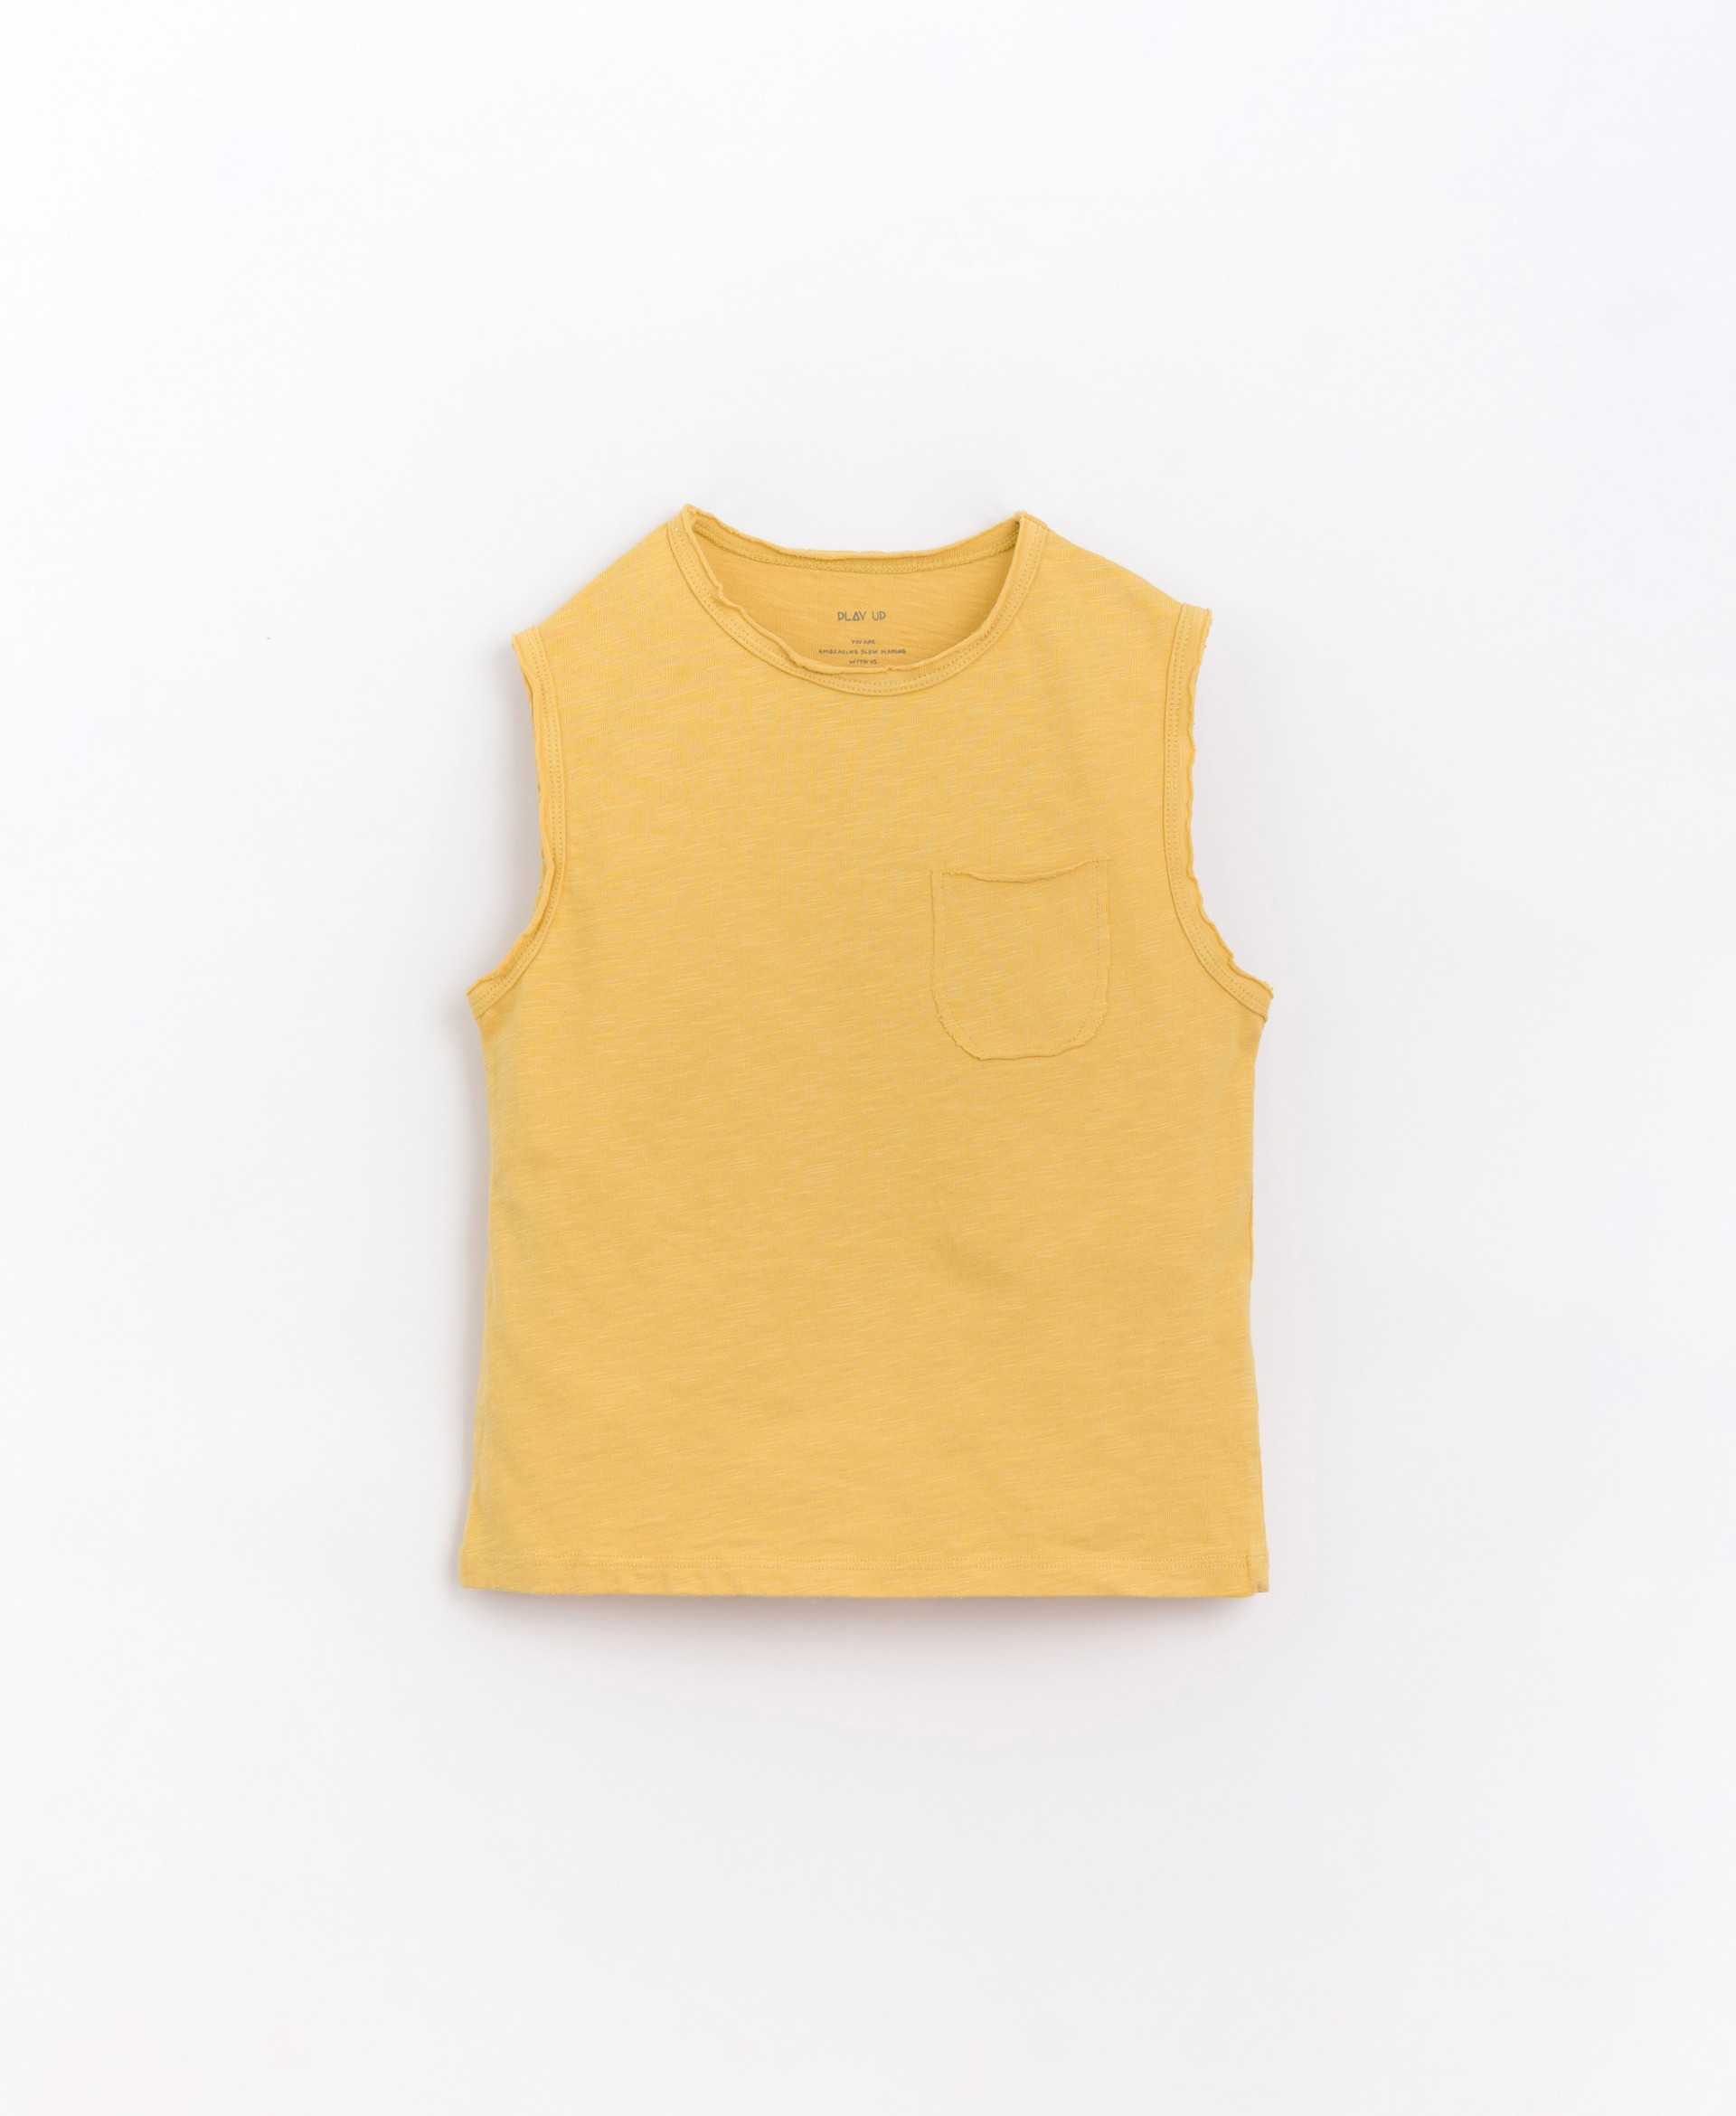 Camiseta sin mangas de algodón orgánico | Basketry 